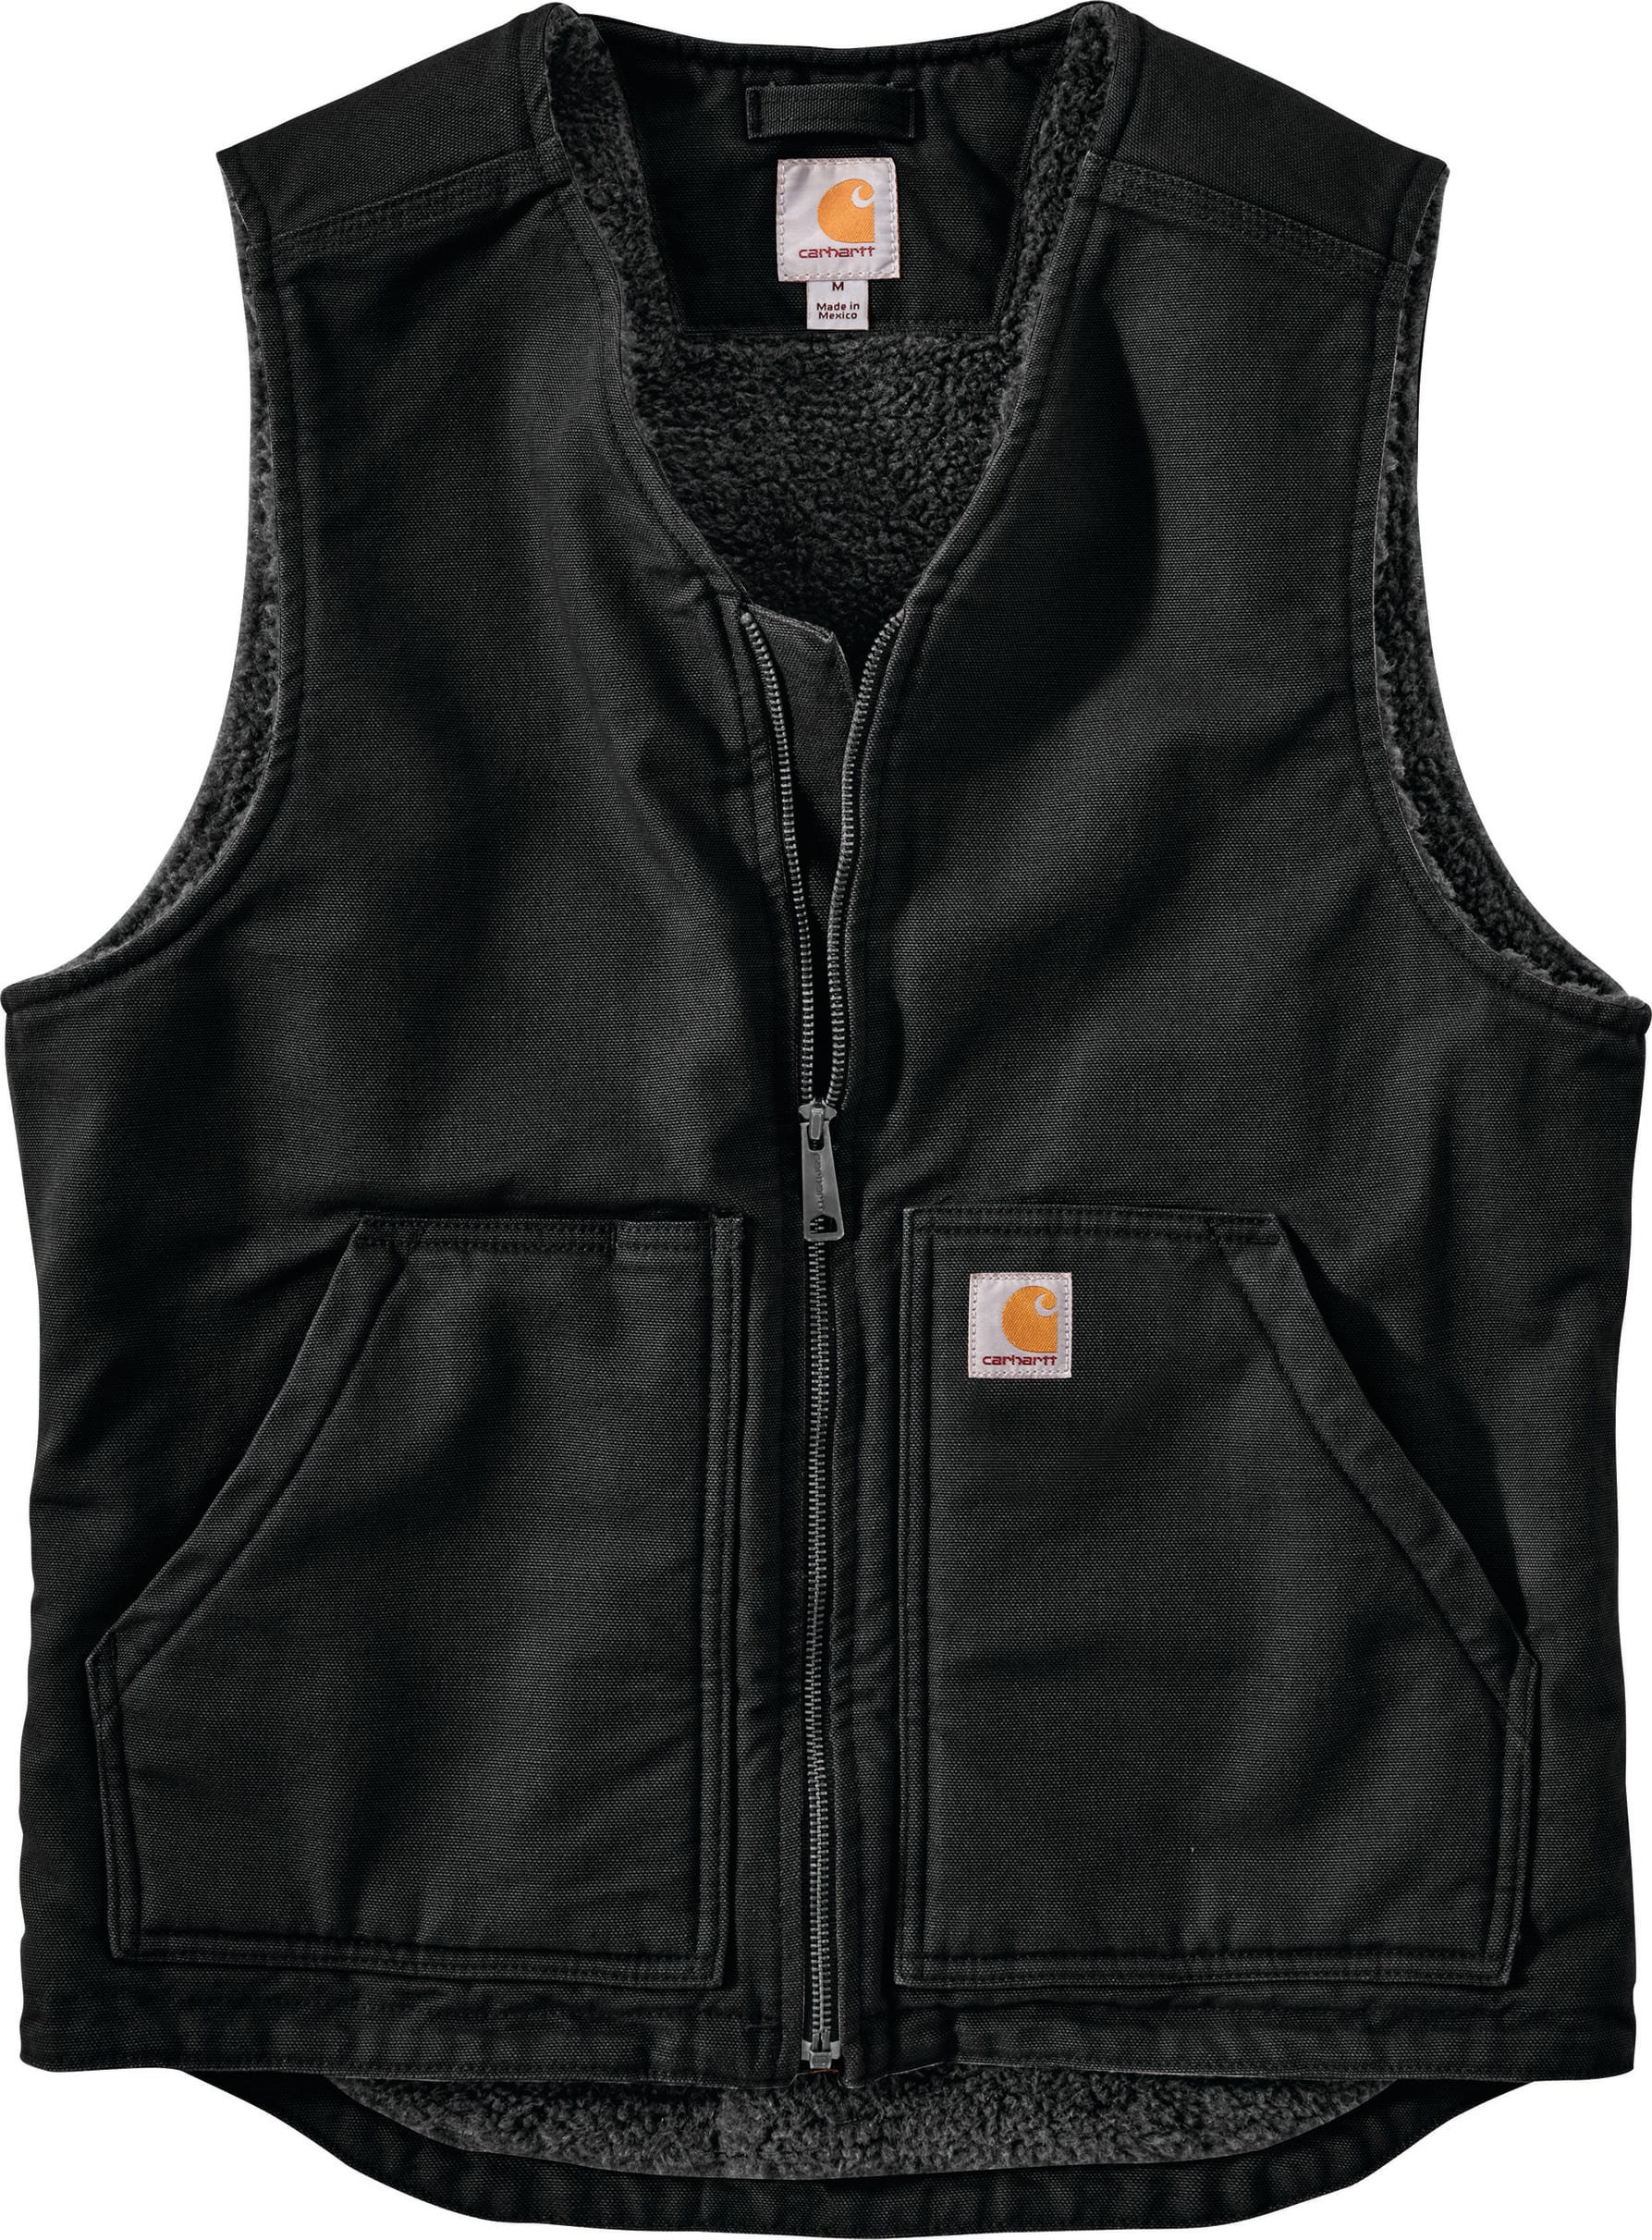 Carhartt 104394 BLK Washed Duck Sherpa Lined Vest Black